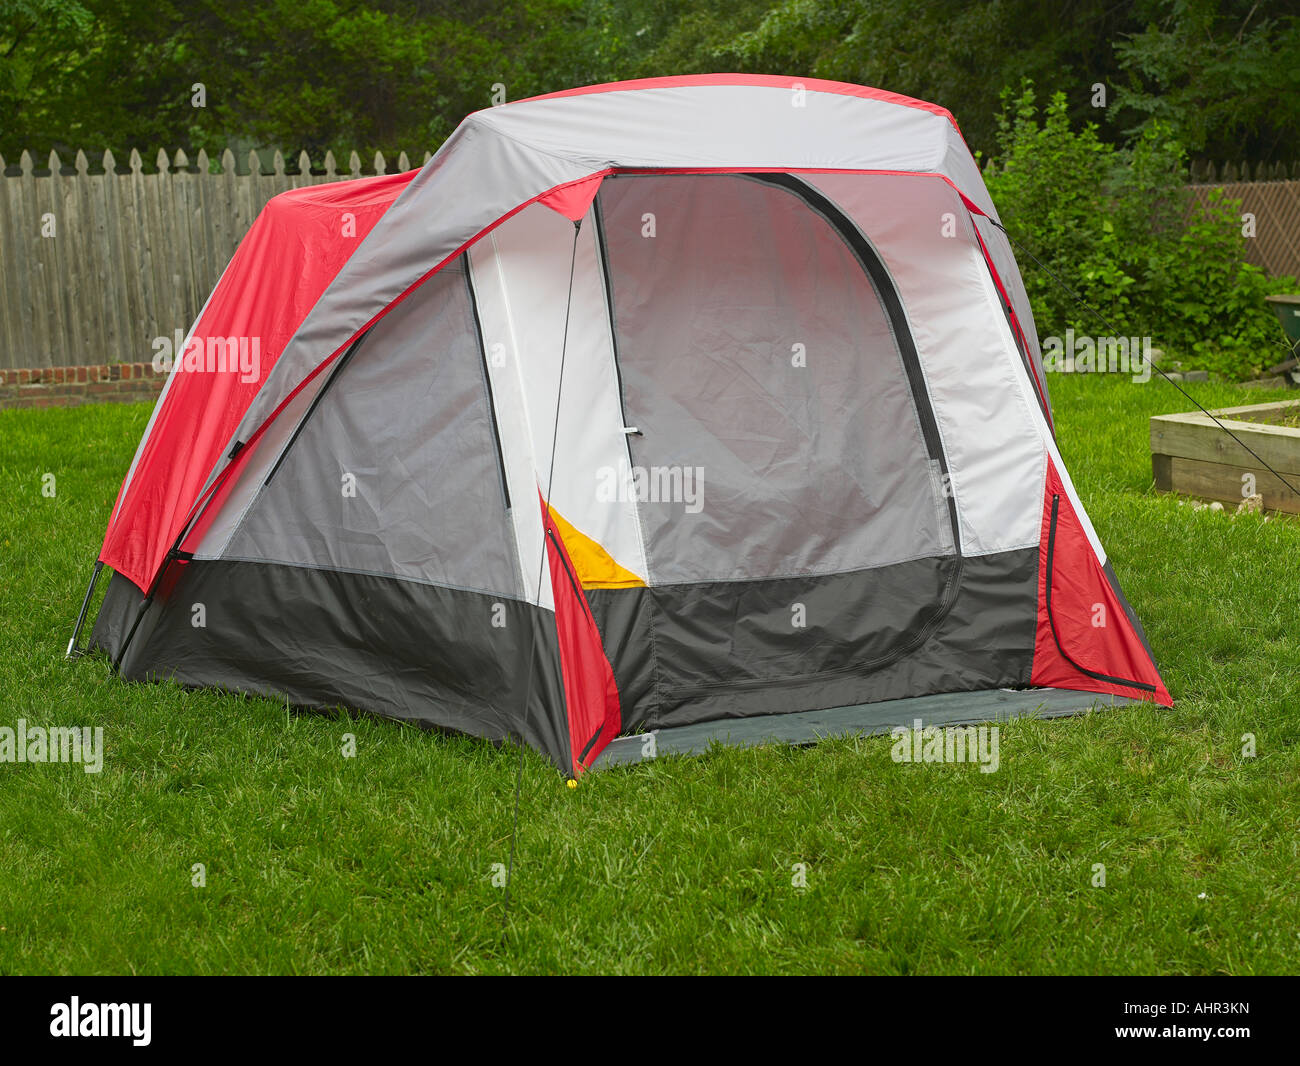 Tent in backyard Stock Photo